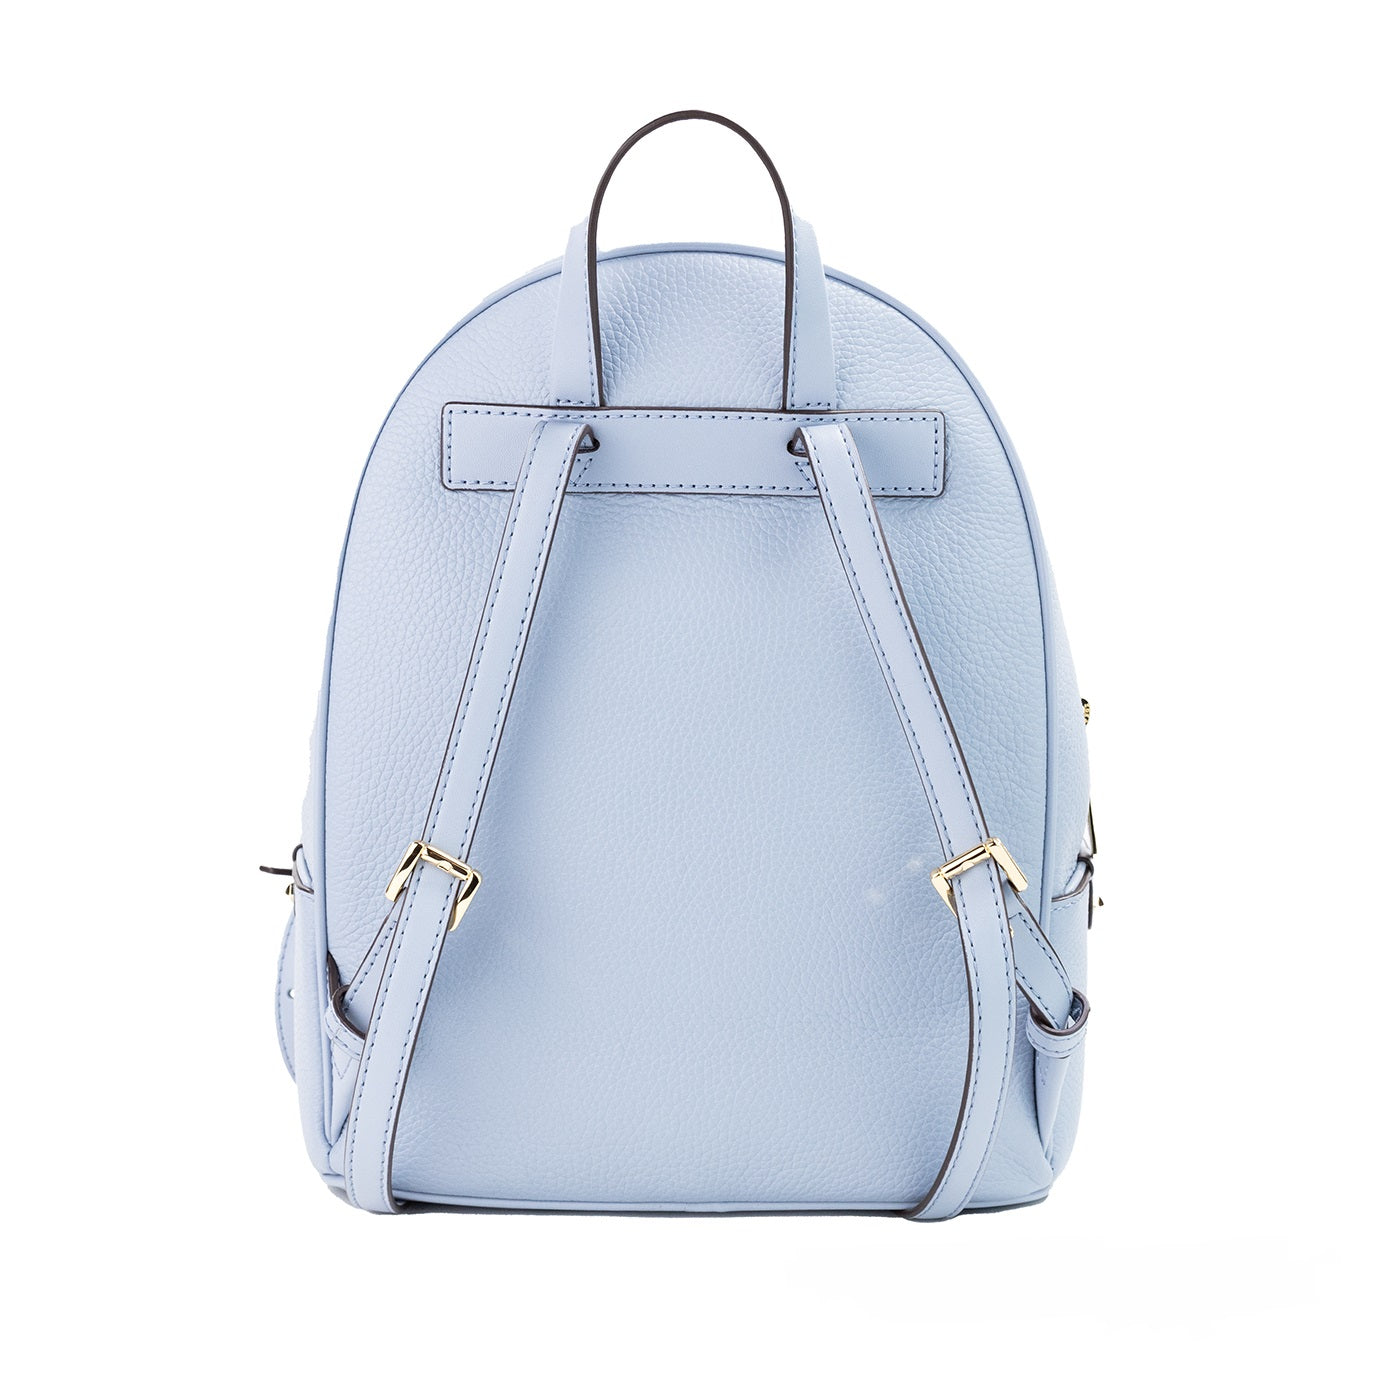 Michael Kors Adina Medium Pale Blue Pebble Leather Convertible Backpack BookBag